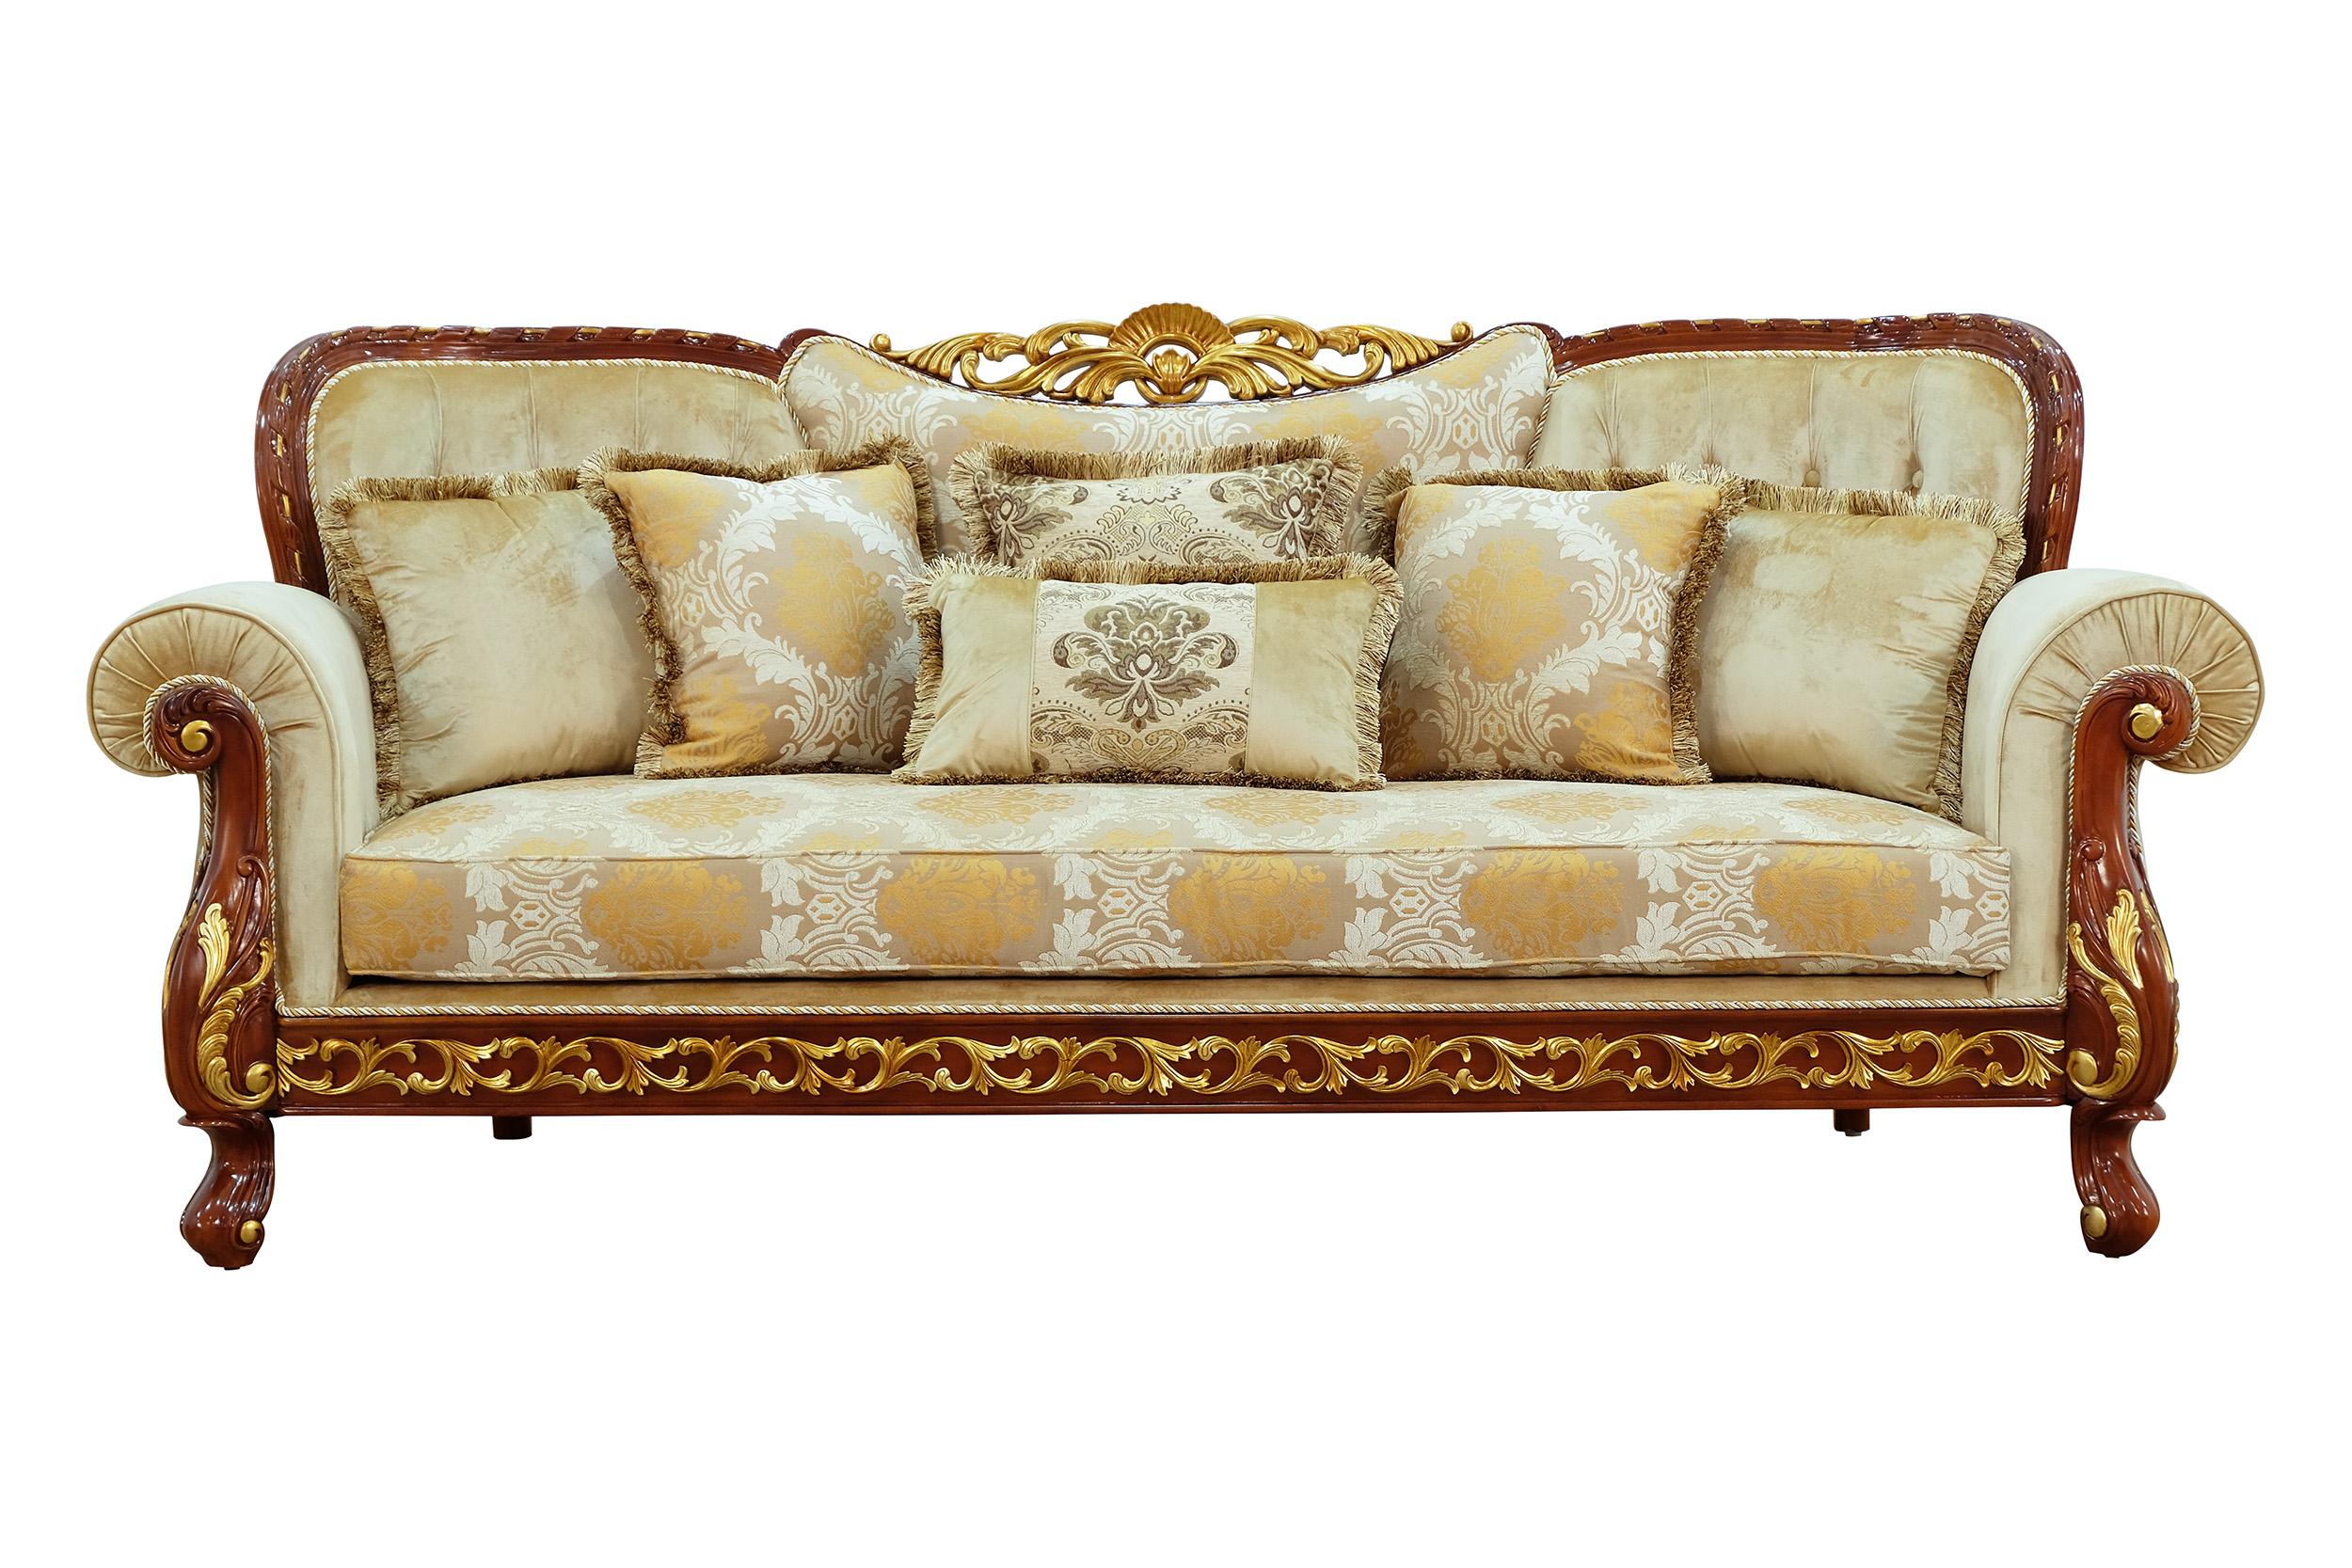 Classic, Traditional Sofa FANTASIA 40019-S in Sand, Walnut, Gold Fabric